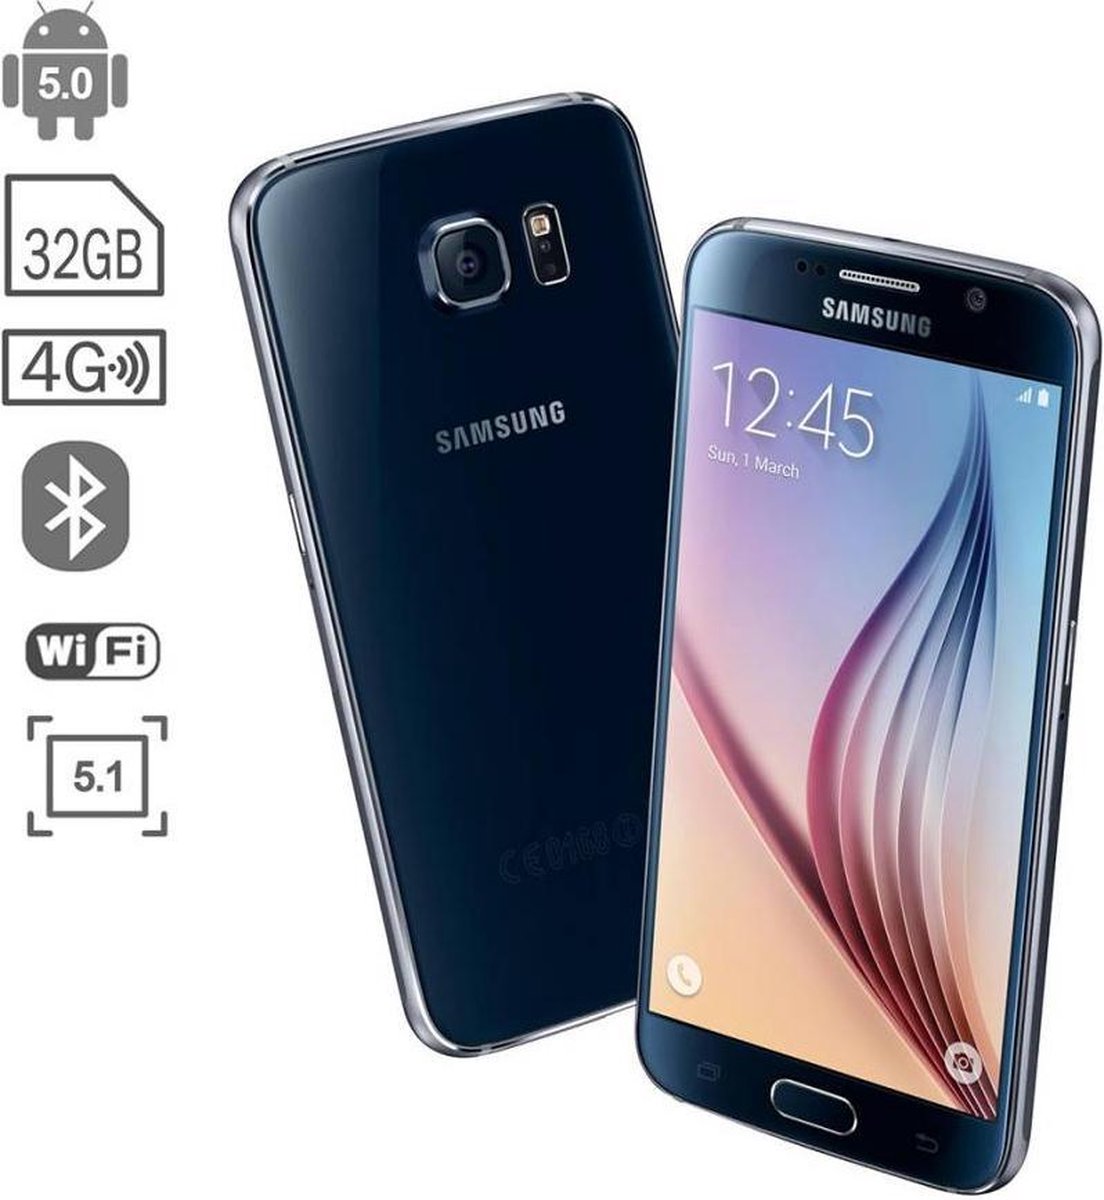 Lot interieur professioneel Samsung Galaxy S6 - 32GB - Zwart | bol.com